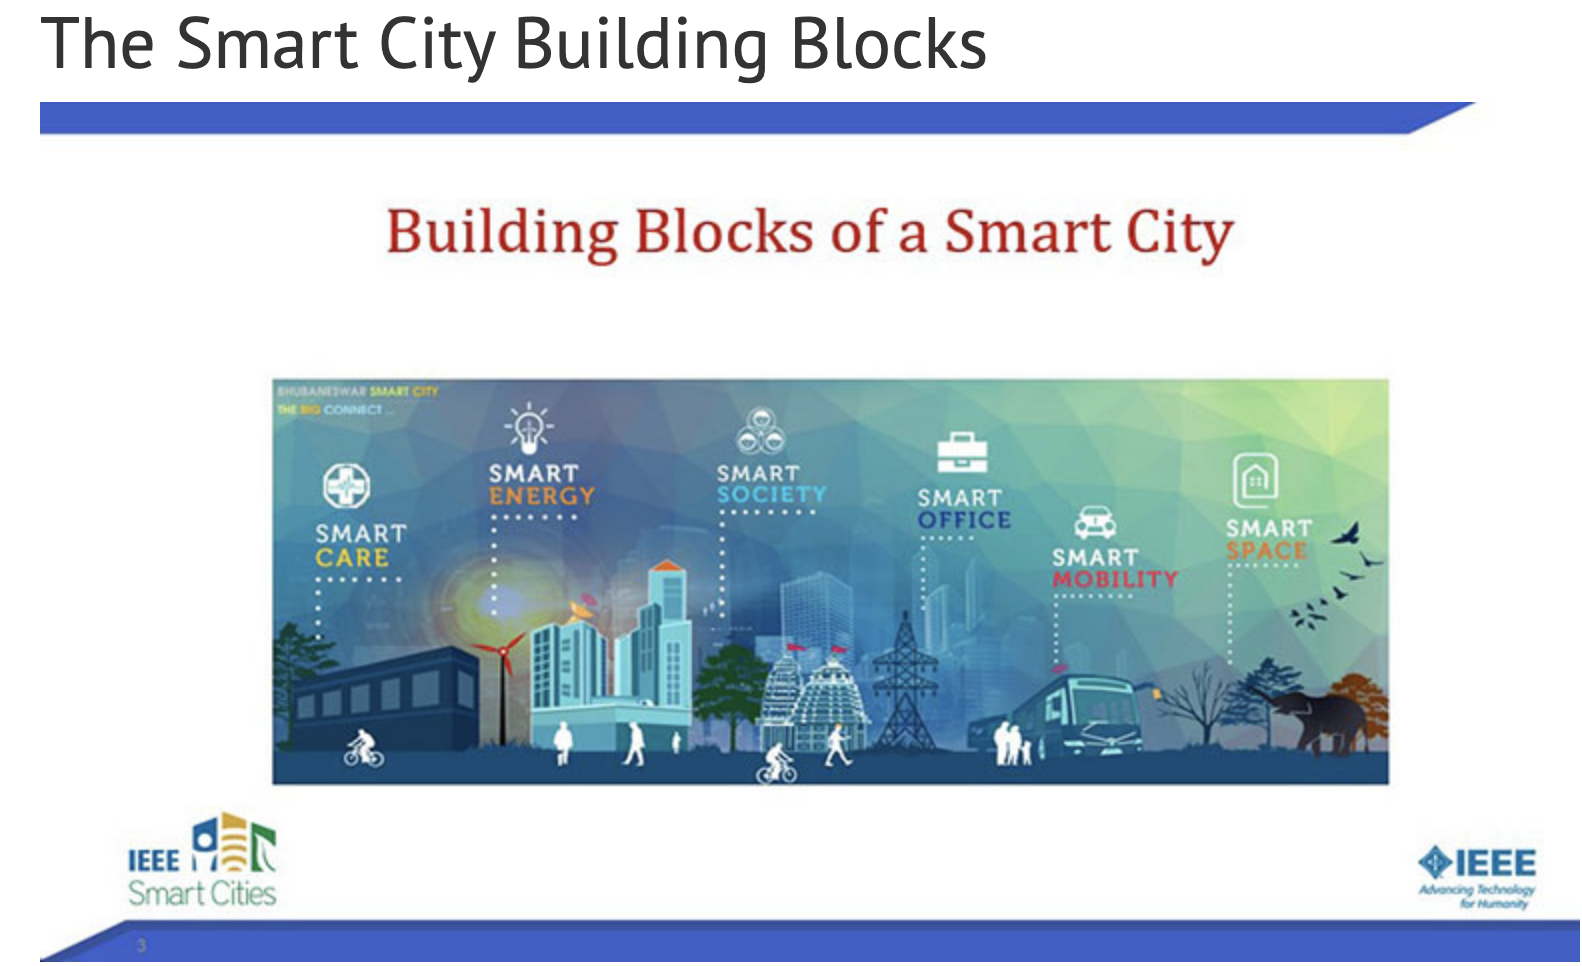 IEEE Smart Cities interviewed with IEEE President-elect 2022, Saifur Rahman